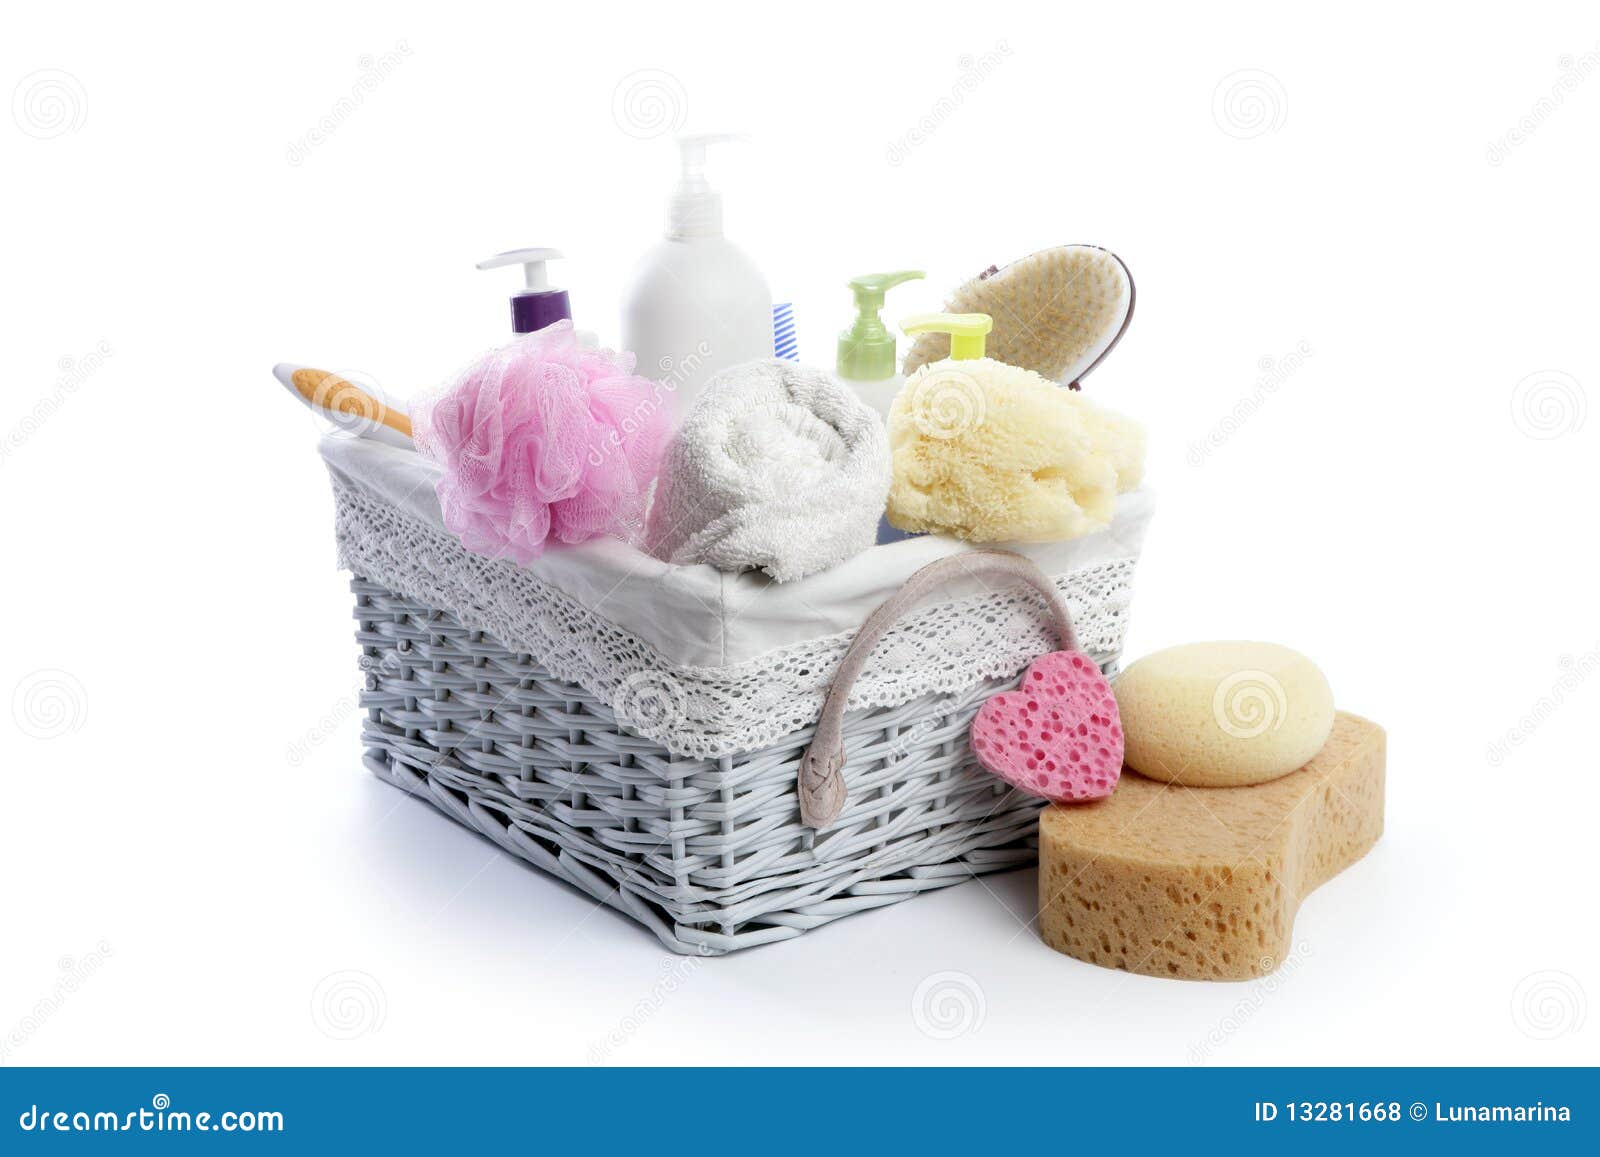 toiletries stuff sponge gel shampoo towels